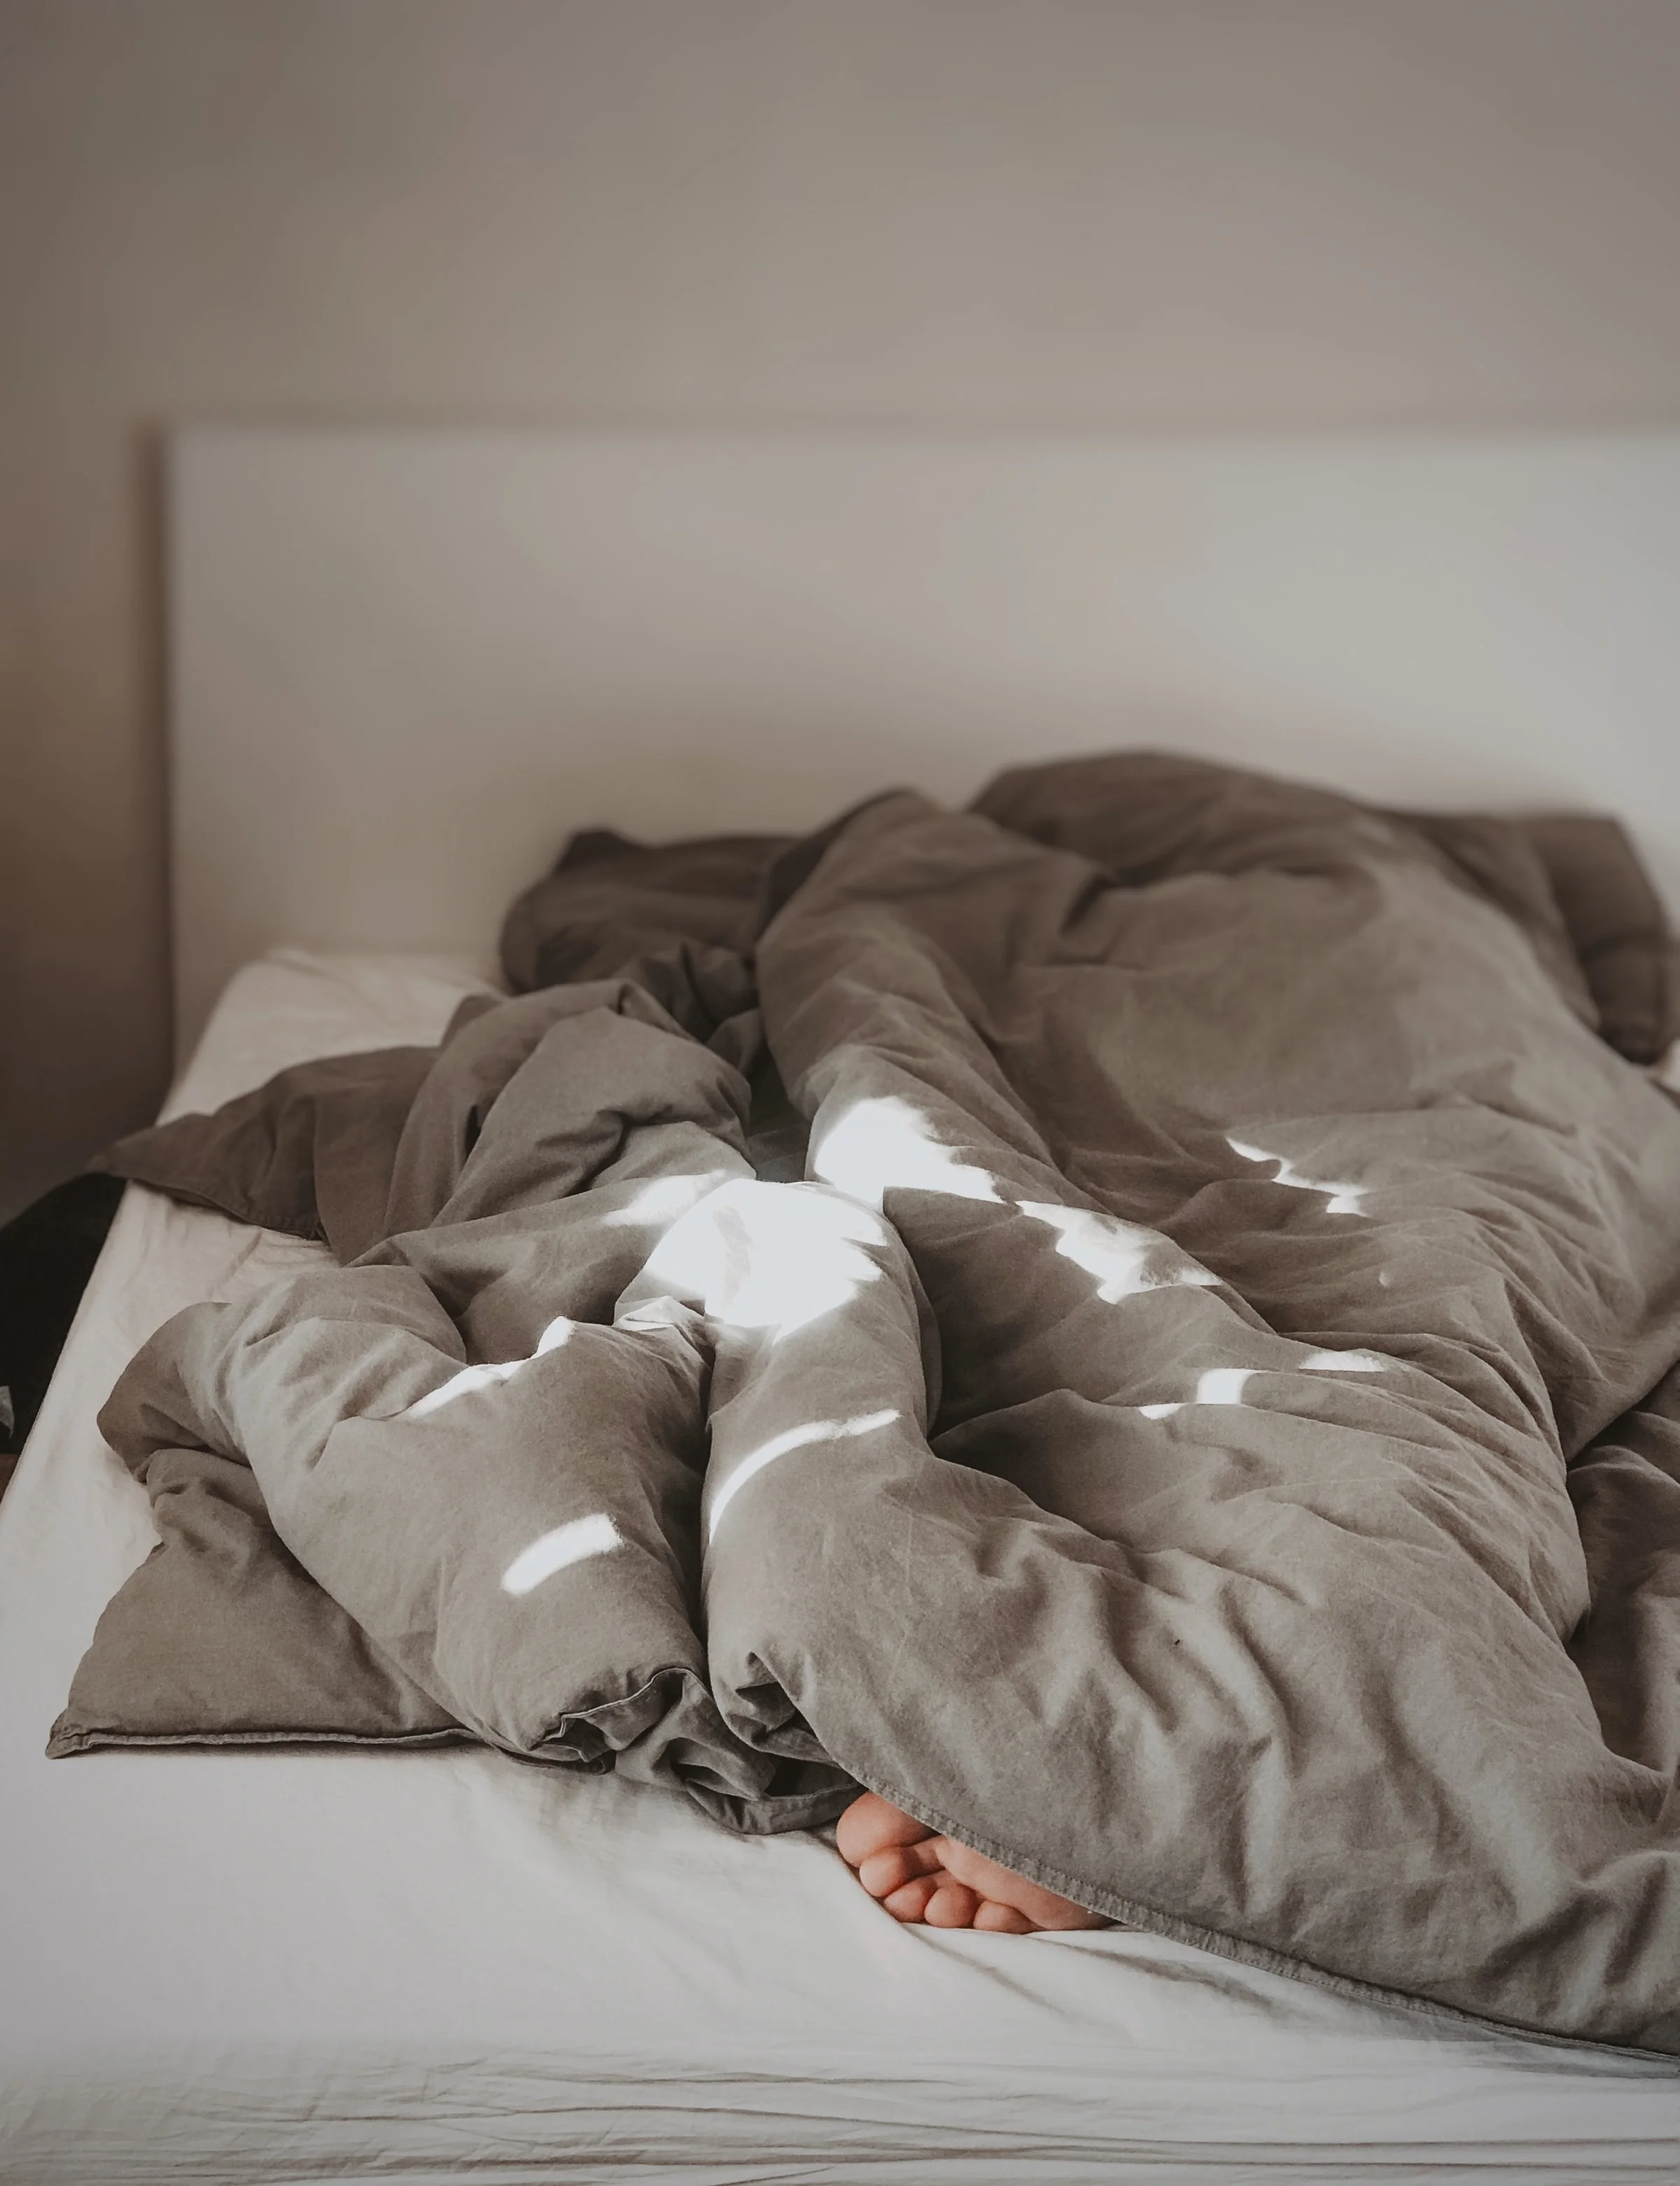 Sleeping tips for a better night’s sleep in Summer